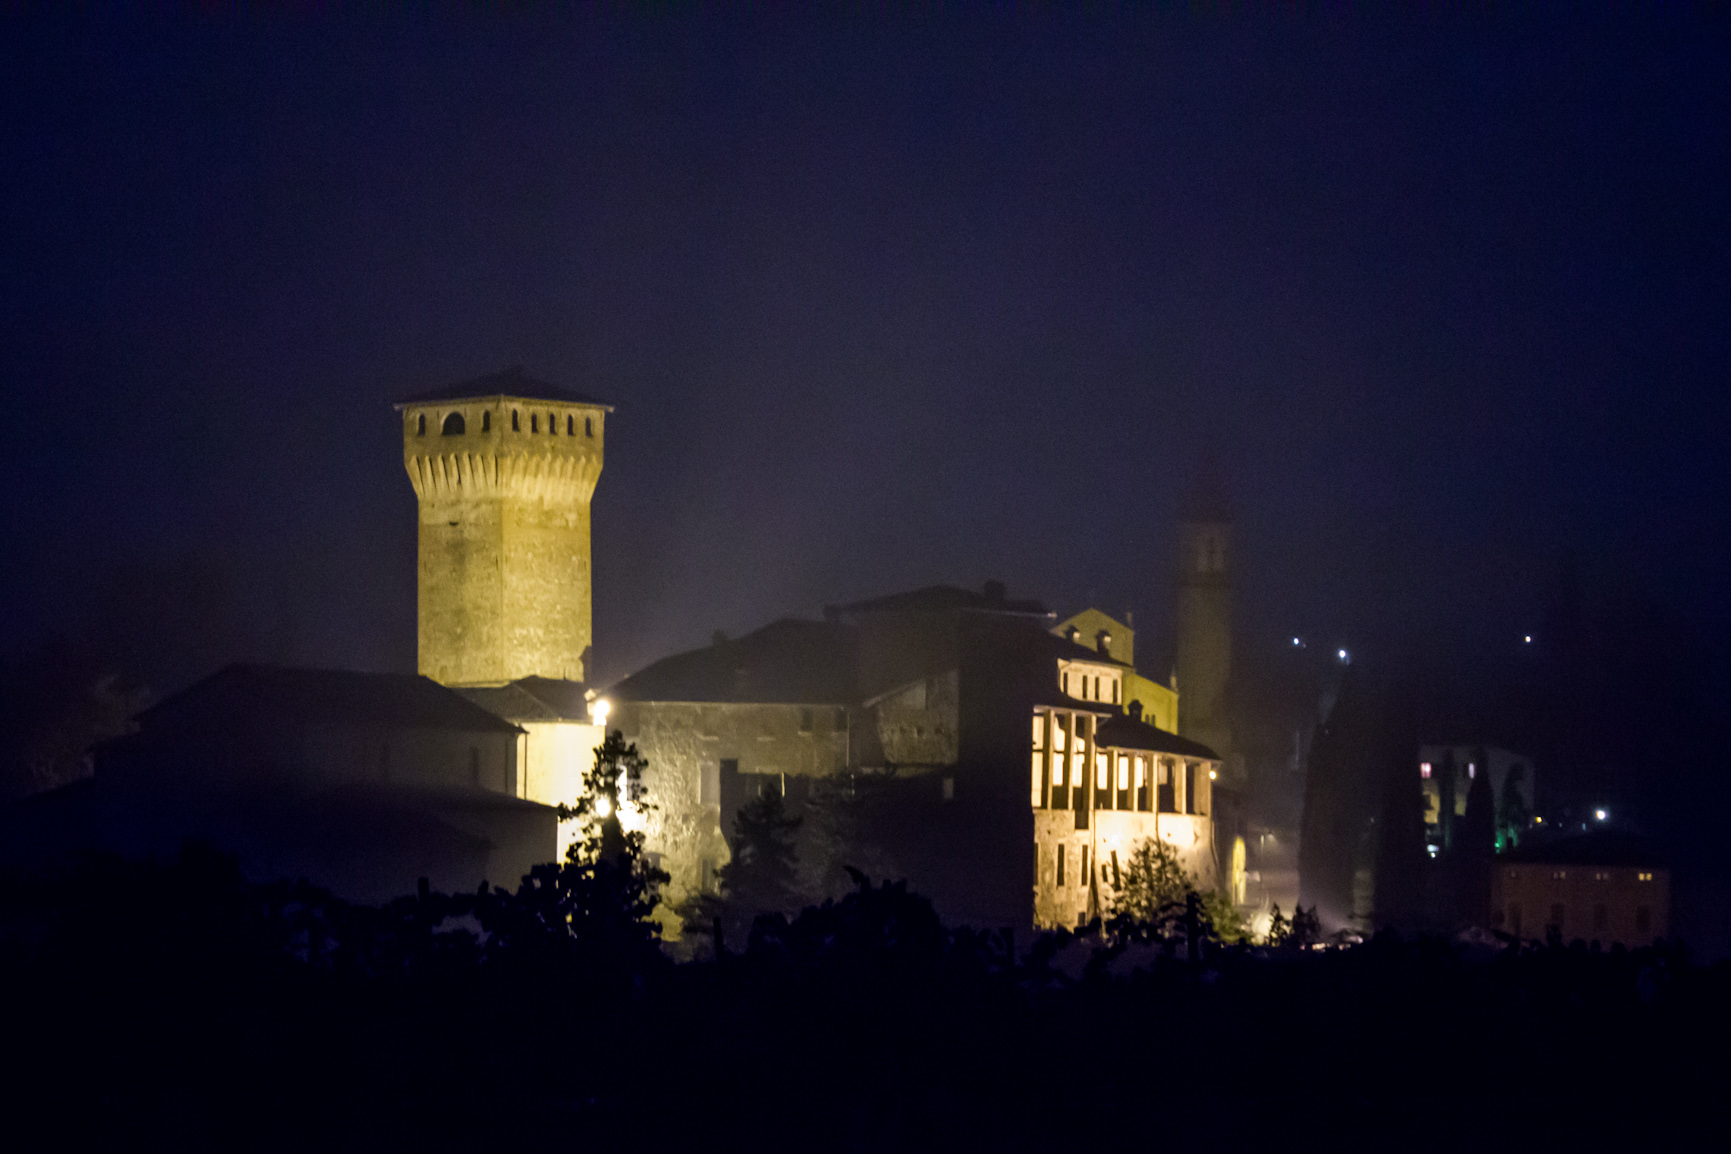 photo: https://upload.wikimedia.org/wikipedia/commons/b/b7/Castello_di_Levizzano_Rangone_visto_da_via_Sapiana_di_notte_ver1.jpg